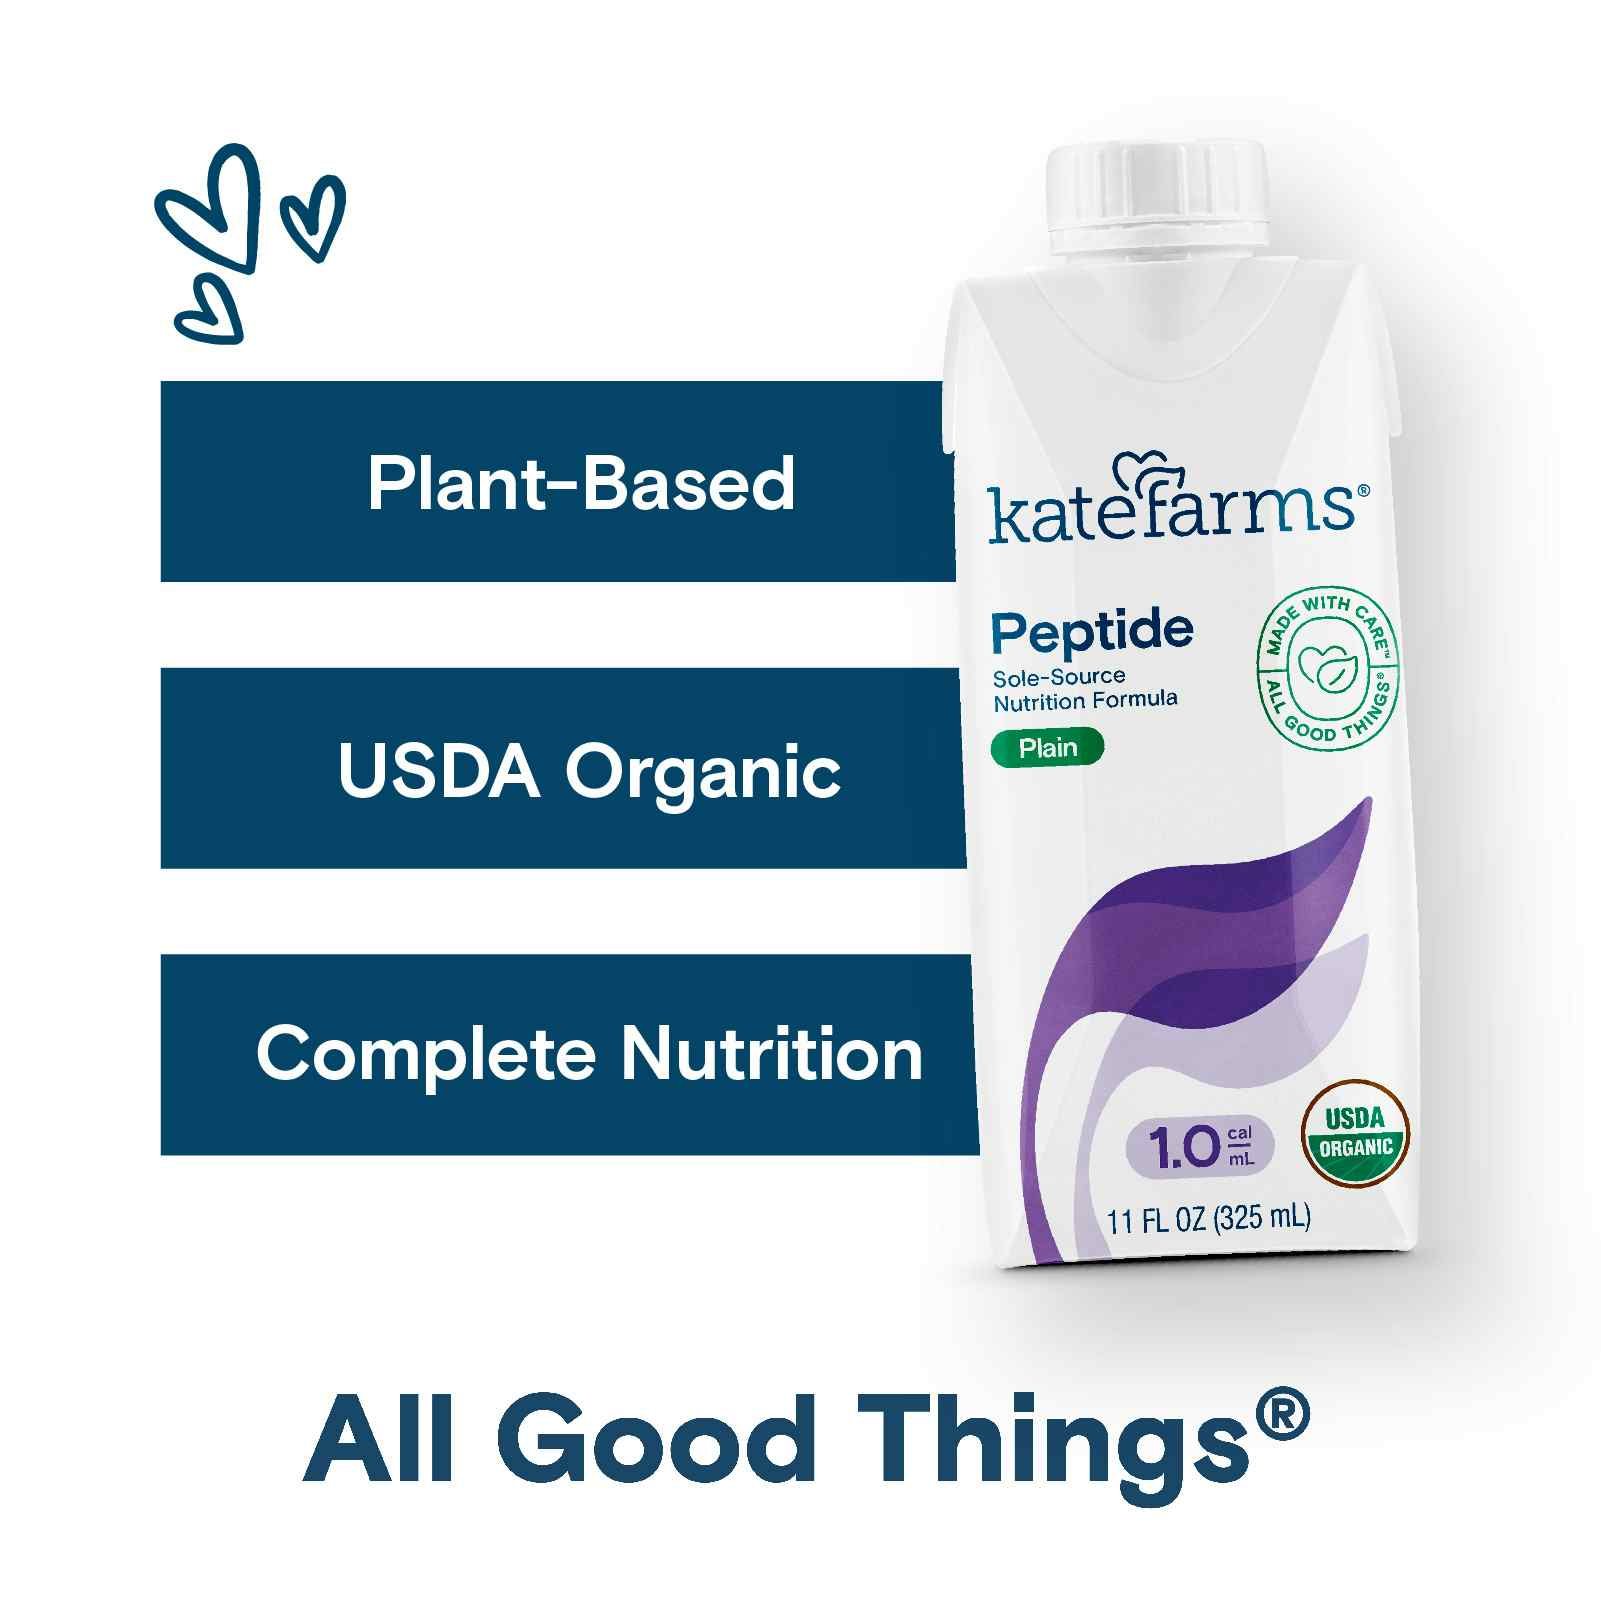 Kate Farms Peptide 1.0 Sole-Source Nutrition, Plain, 11 oz.